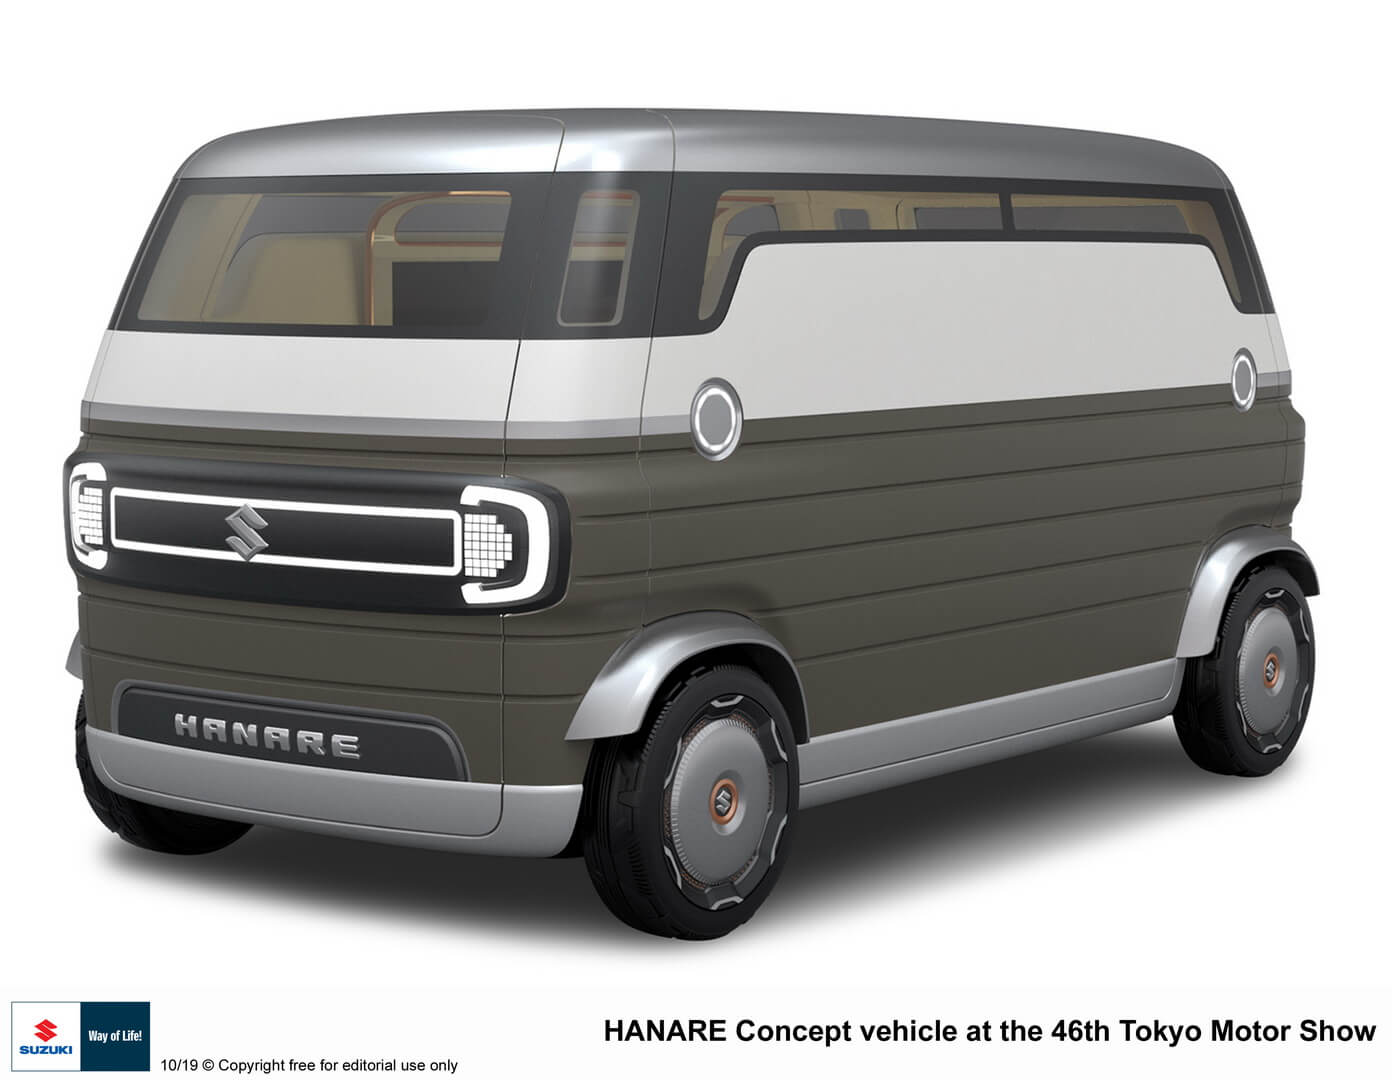 Suzuki презентует в Токио автономный фургон Hanare